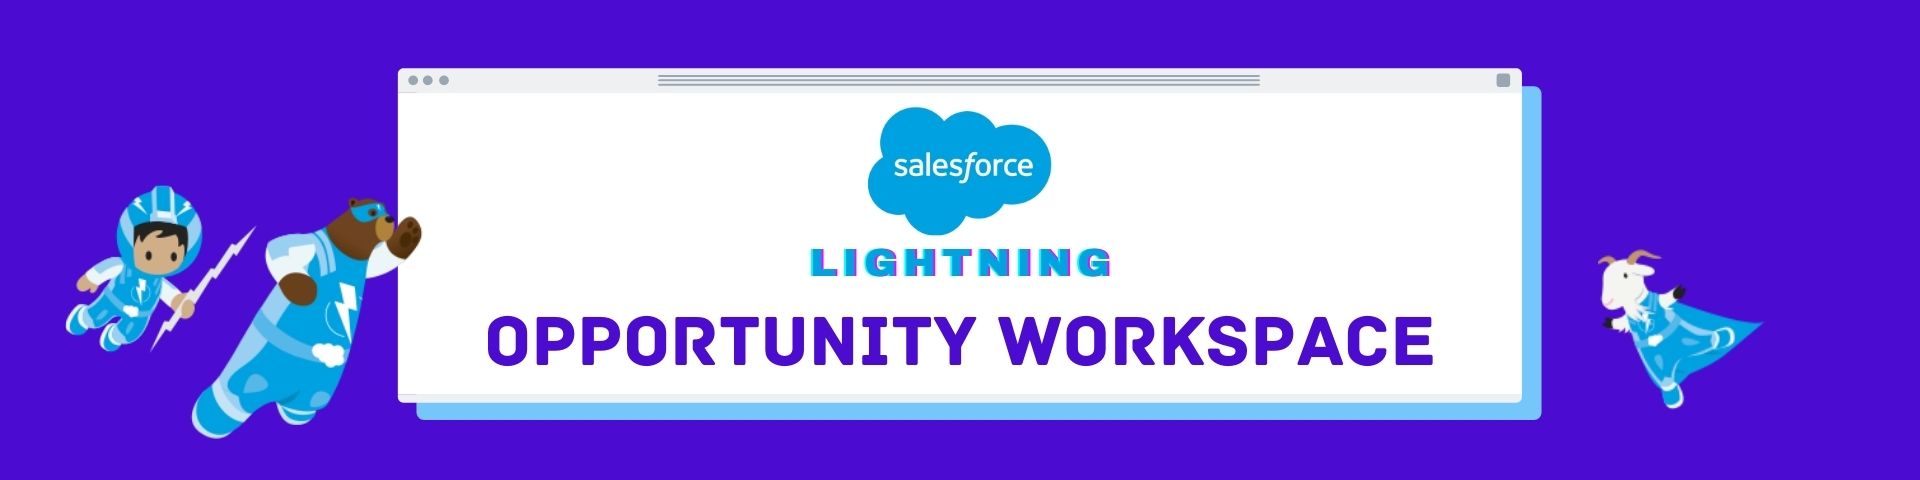 Salesforce Lightning opportunity workspace